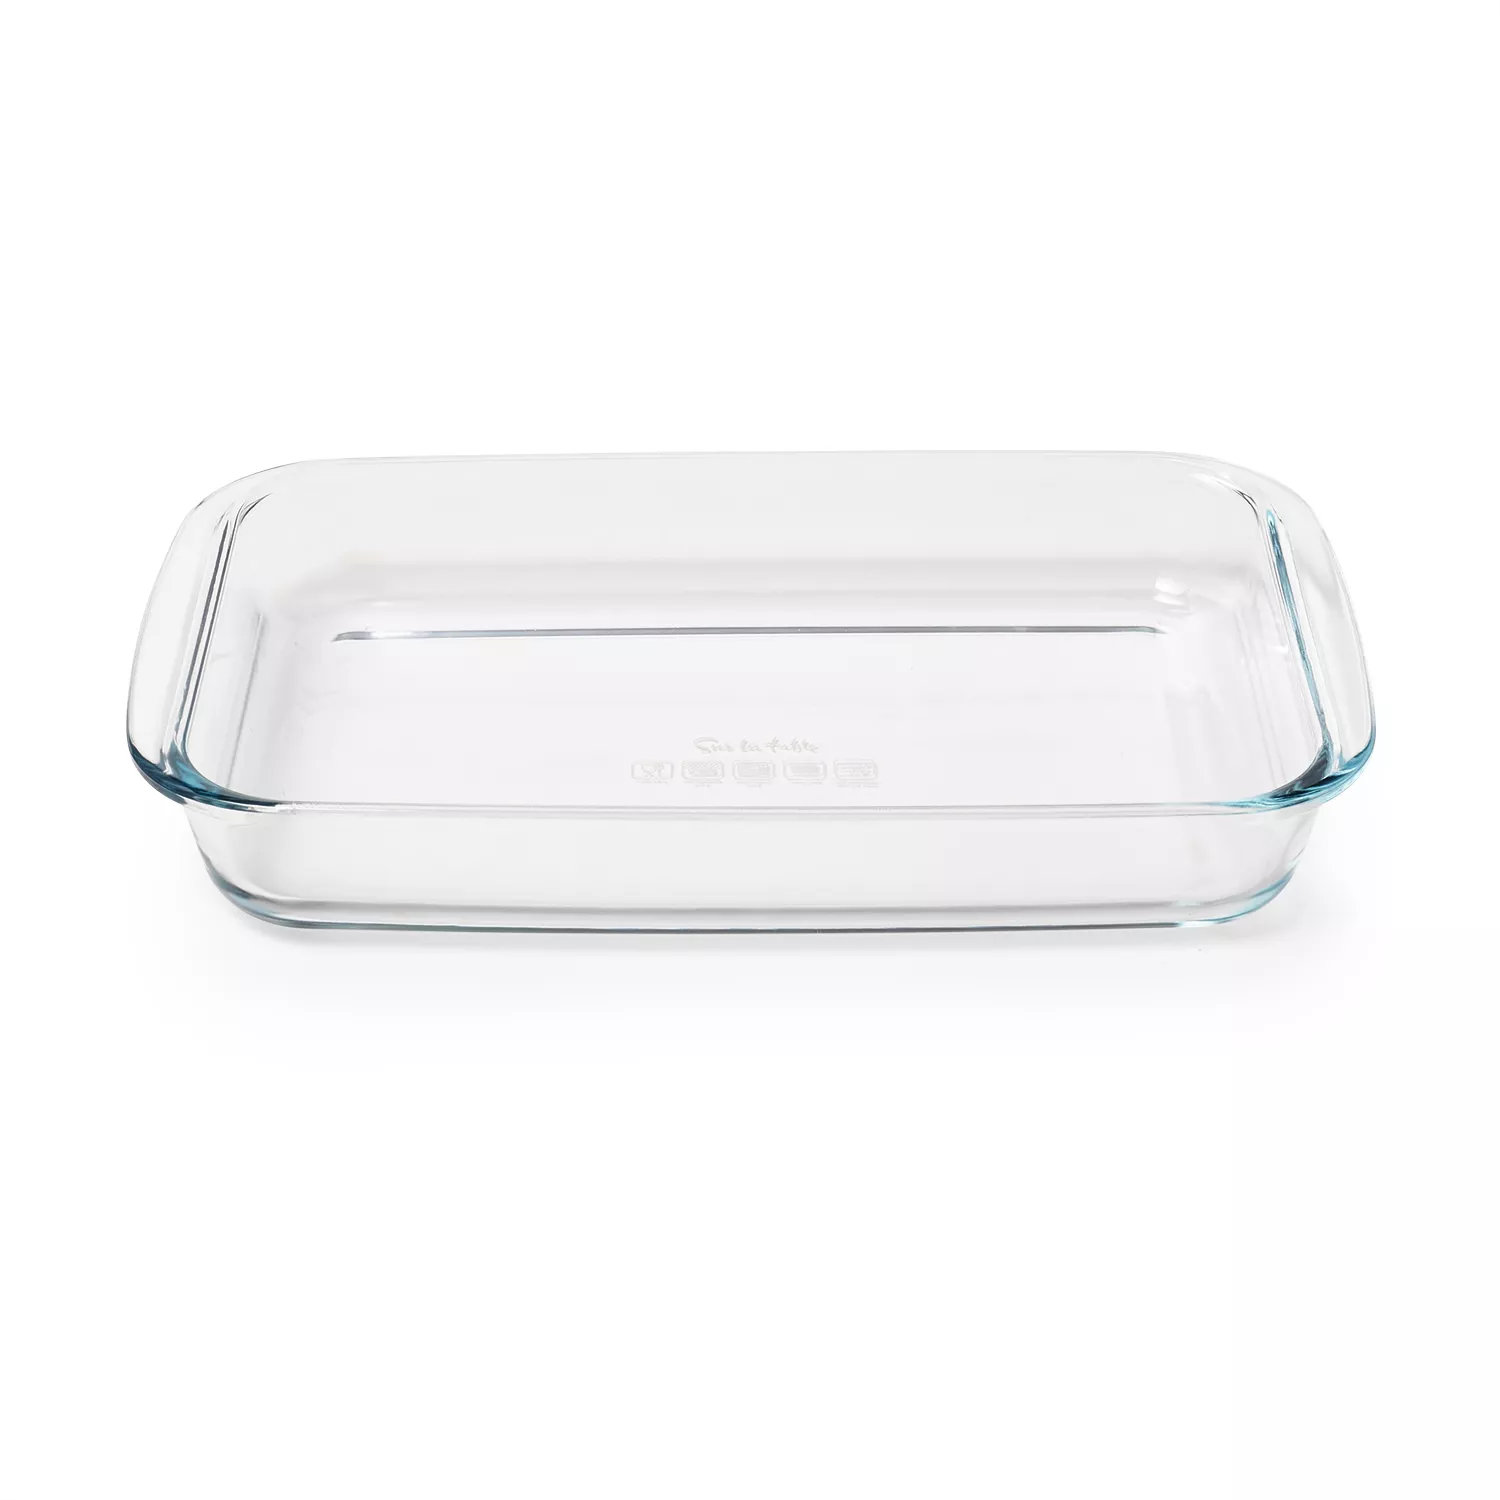 9 X 9 Inch Glass Baking Dish,High-Borosilicate Square Glass